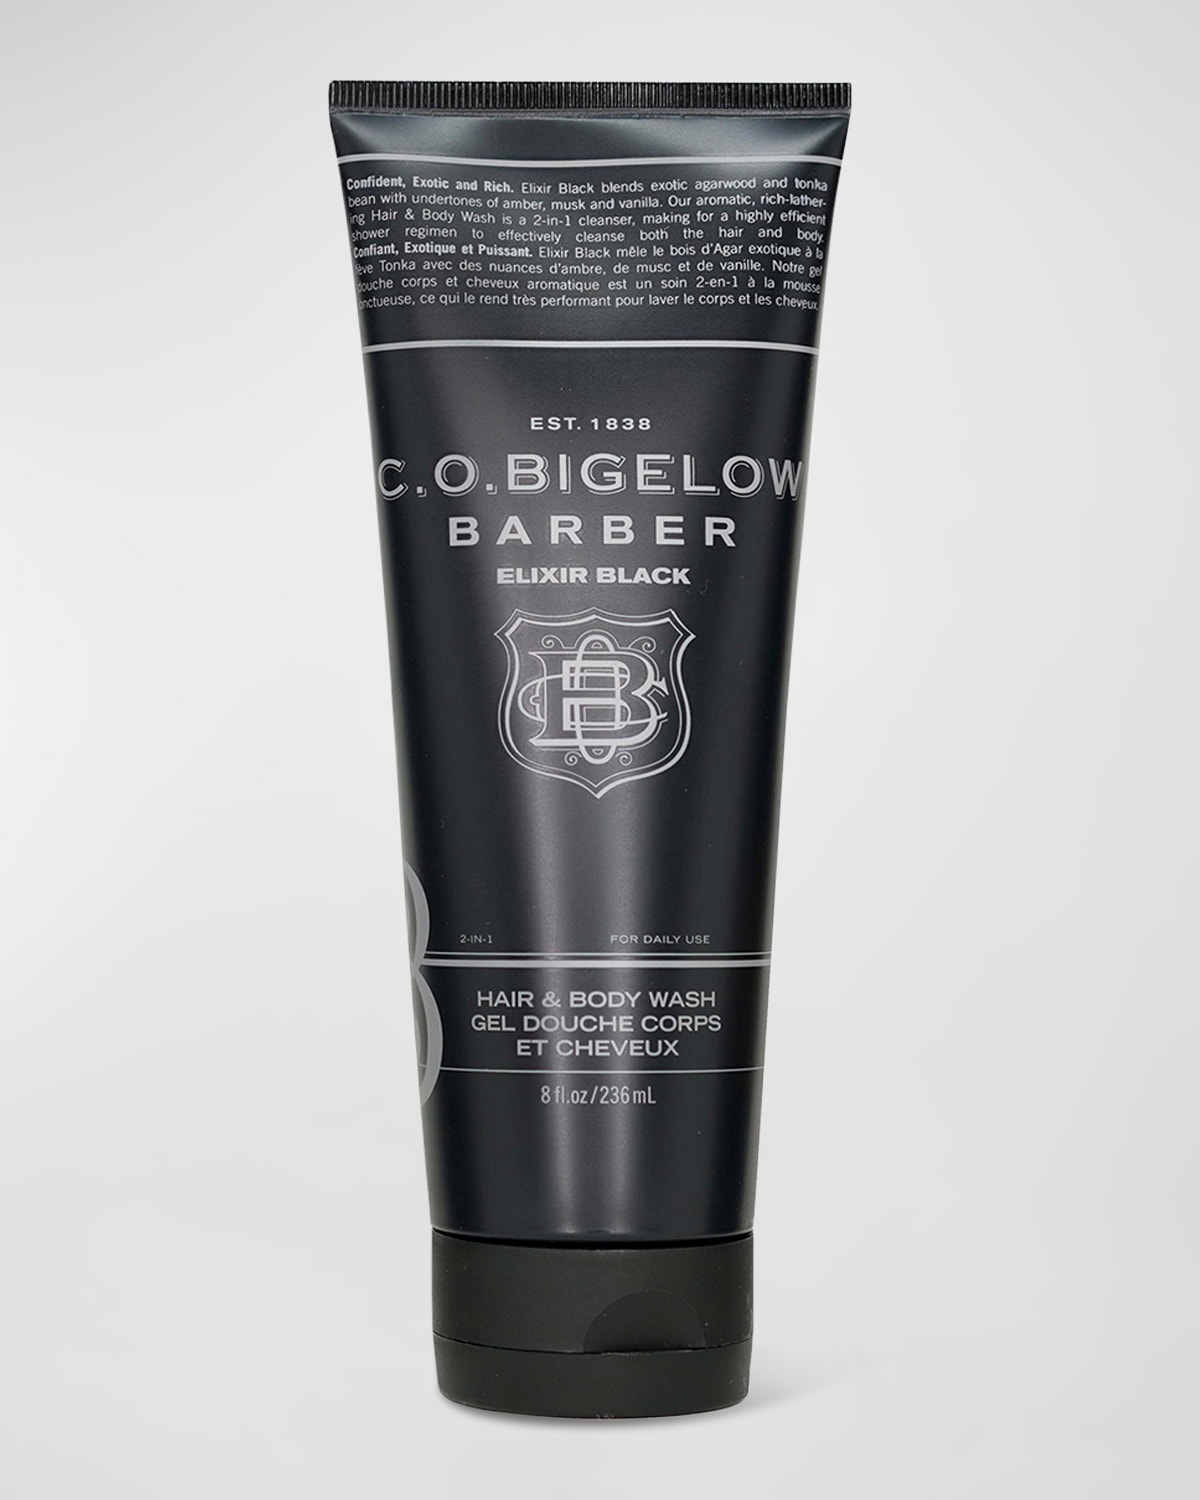 C.O. Bigelow Men's Elixir Black Hair and Body Wash, 3.4 oz.